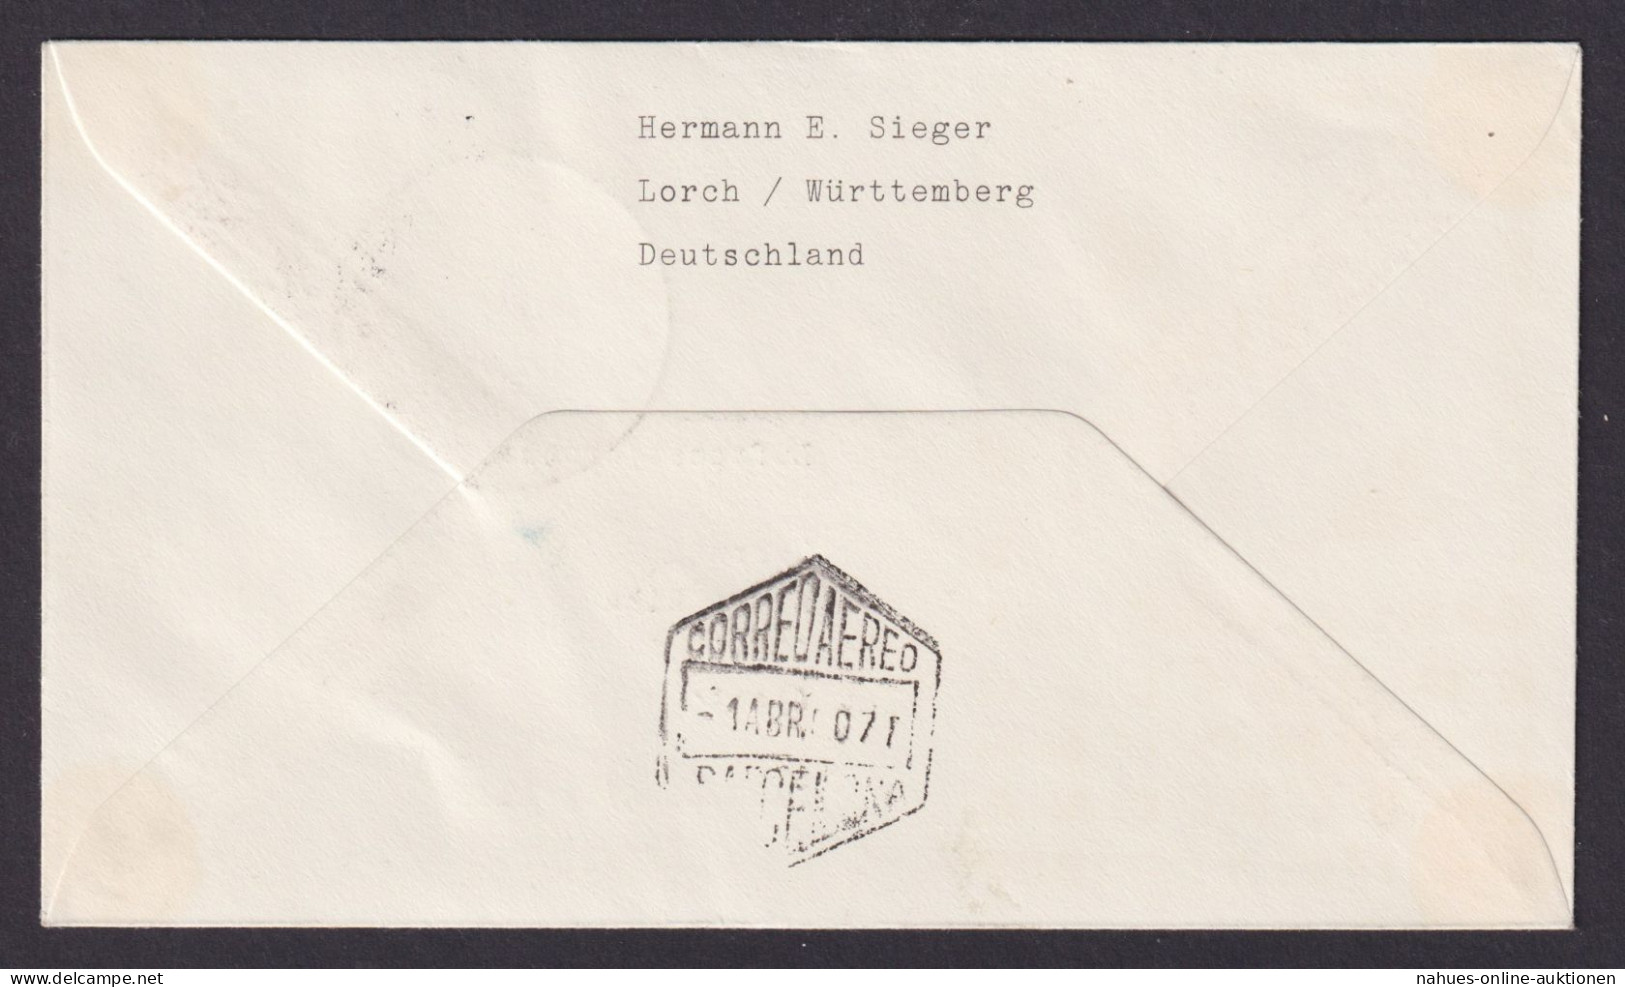 Flugpost Brief Air Mail Bund Erstflug Lufhansa LH176 I-IV Hannover Barcelona - Lettres & Documents